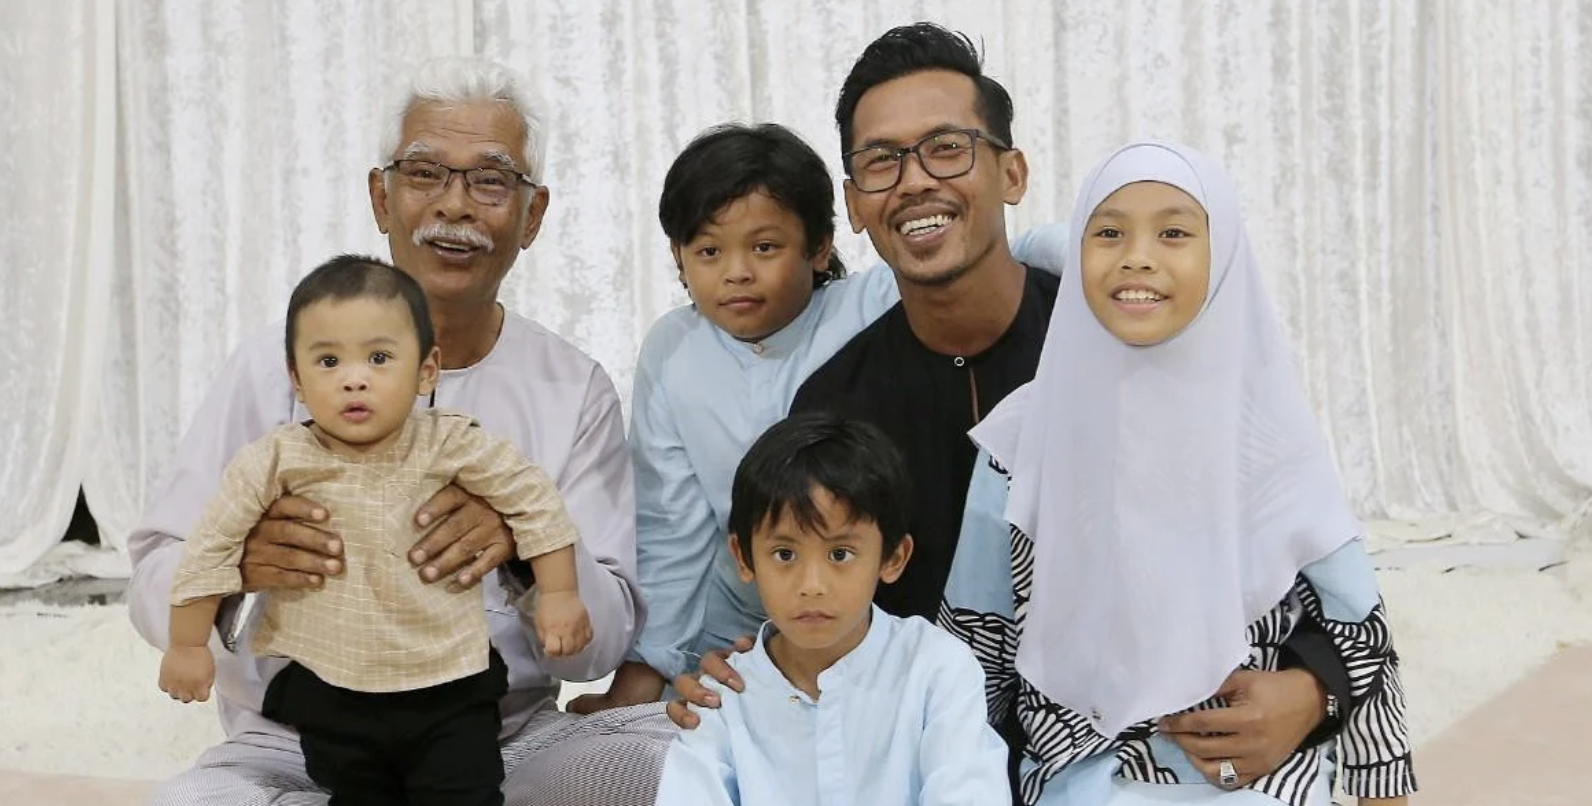 Wajah, Tangan & Sifat Manja Uwais Sama Seperti Arwah Siti Sarah – Raisuddin Hamzah